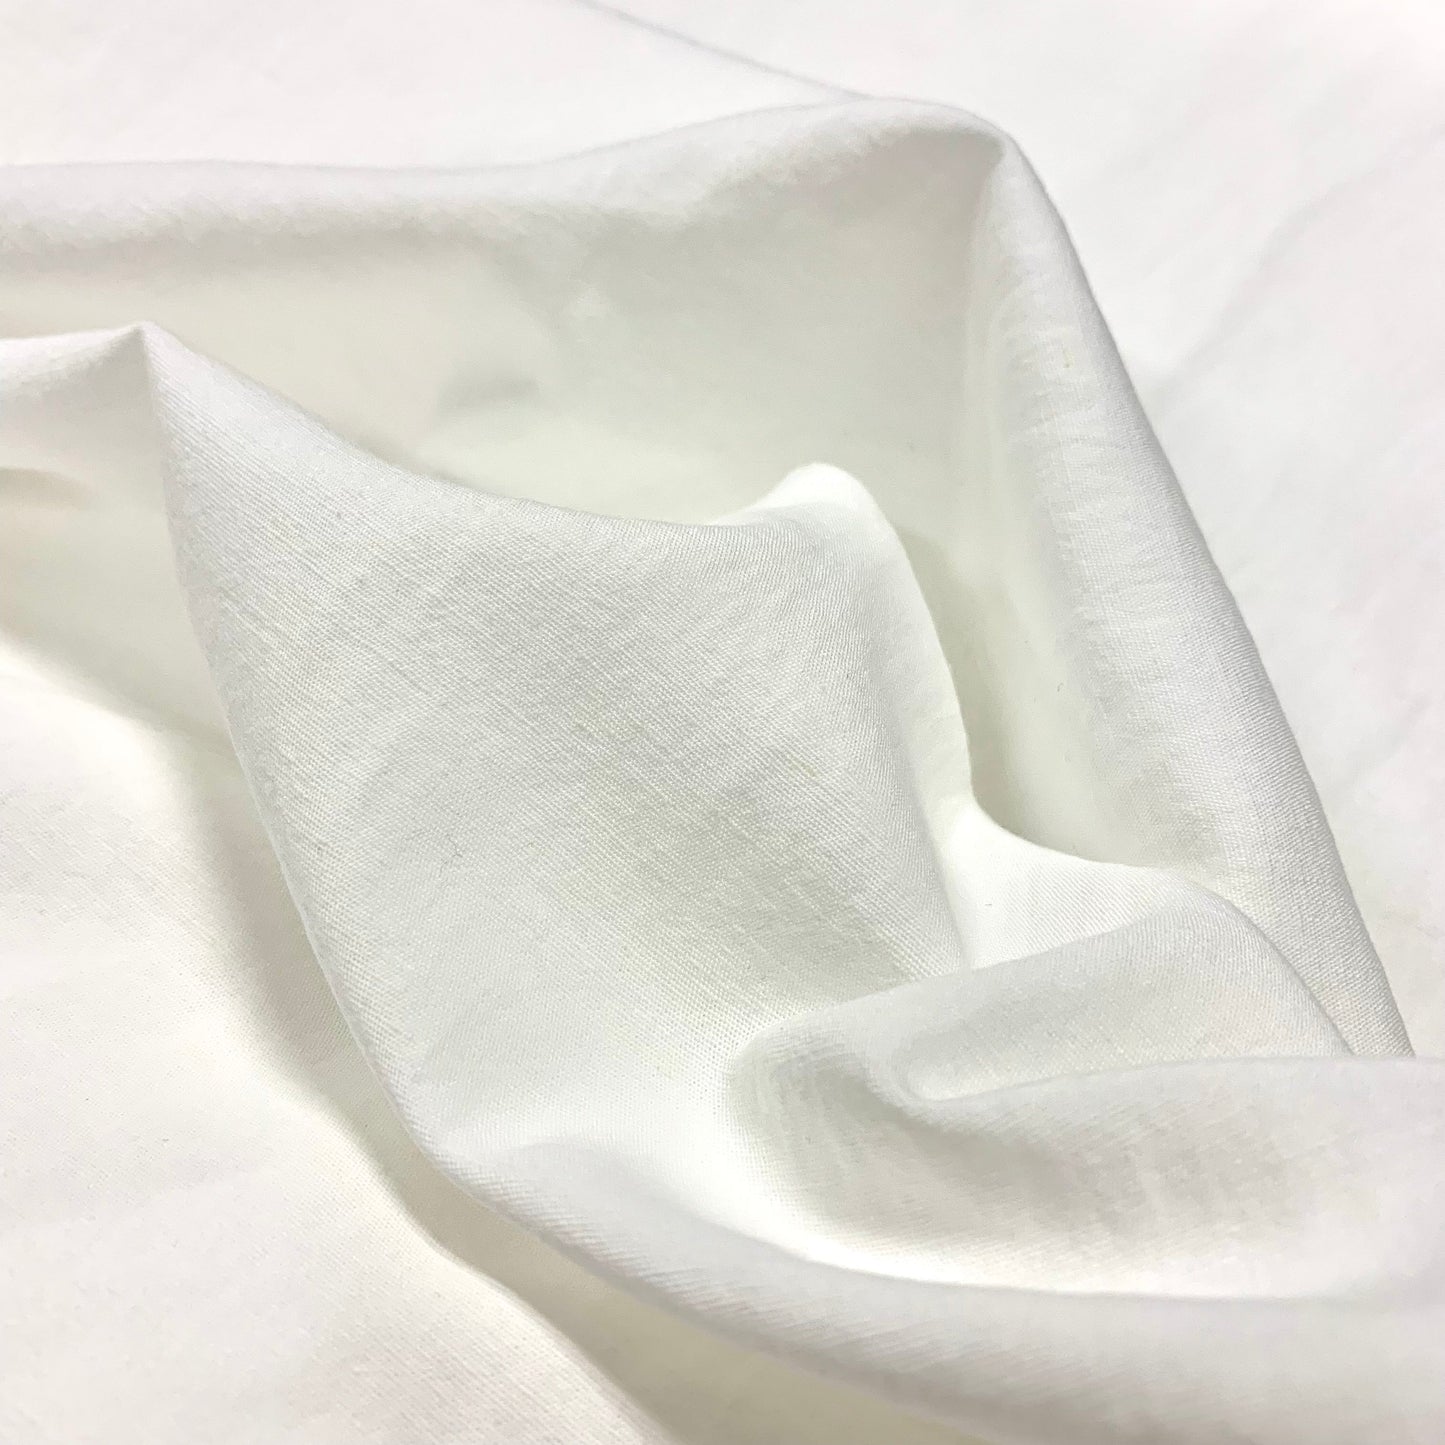 Japan | 淨色薄棉麻 solid lightweight cotton linen - 13colors